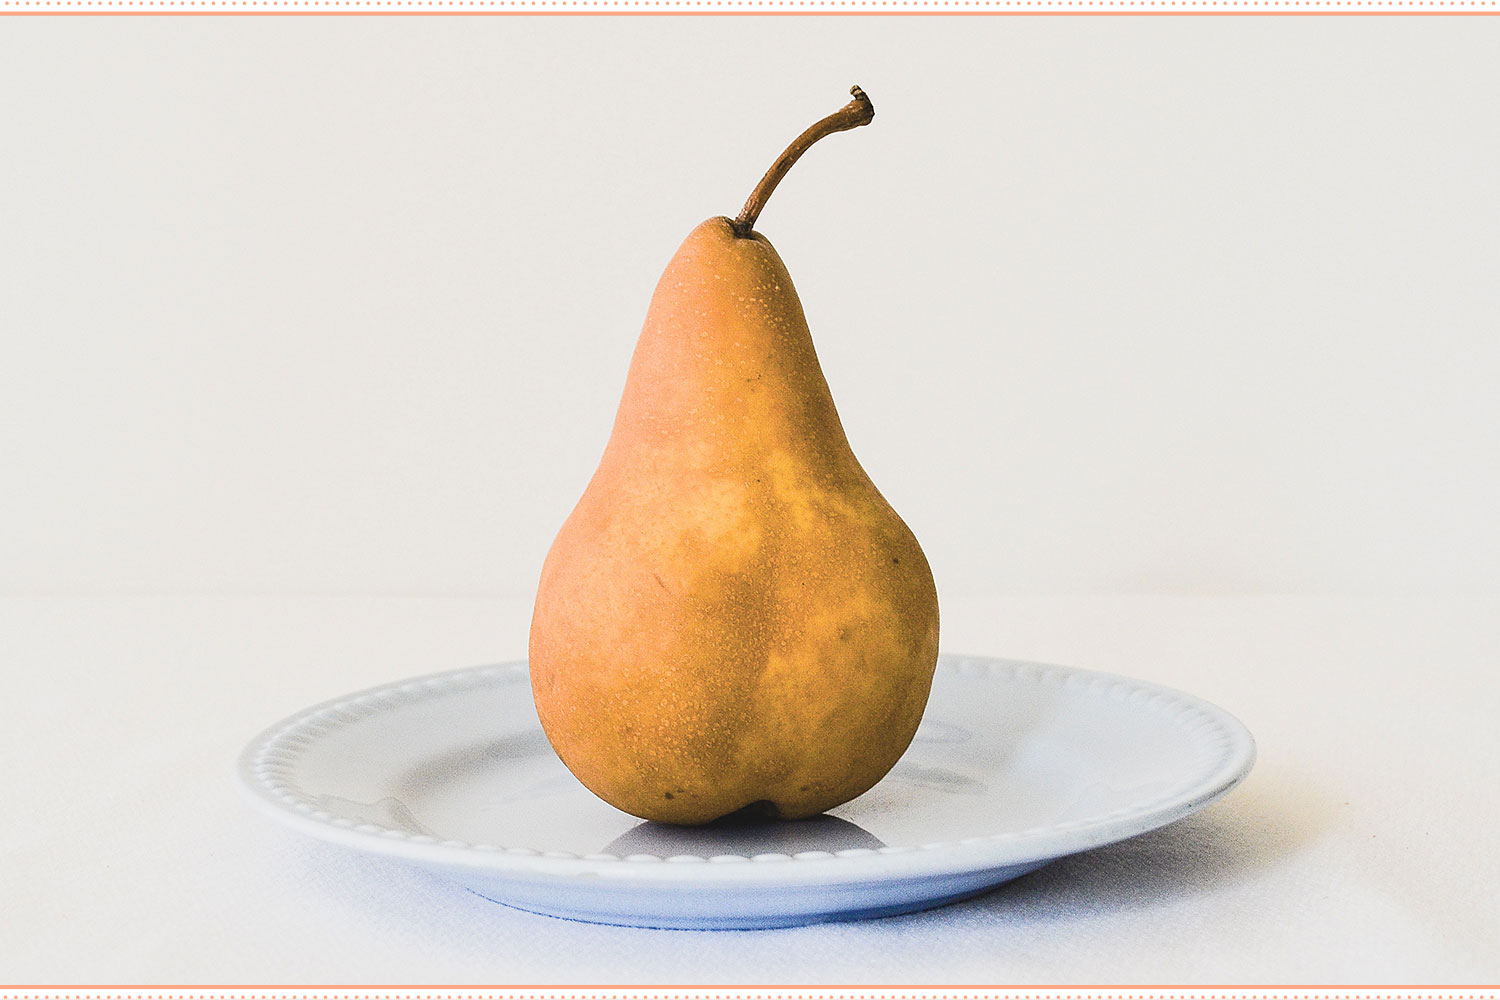 https://www.berries.com/blog/wp-content/uploads/2019/05/types-of-fruit-pear.jpg